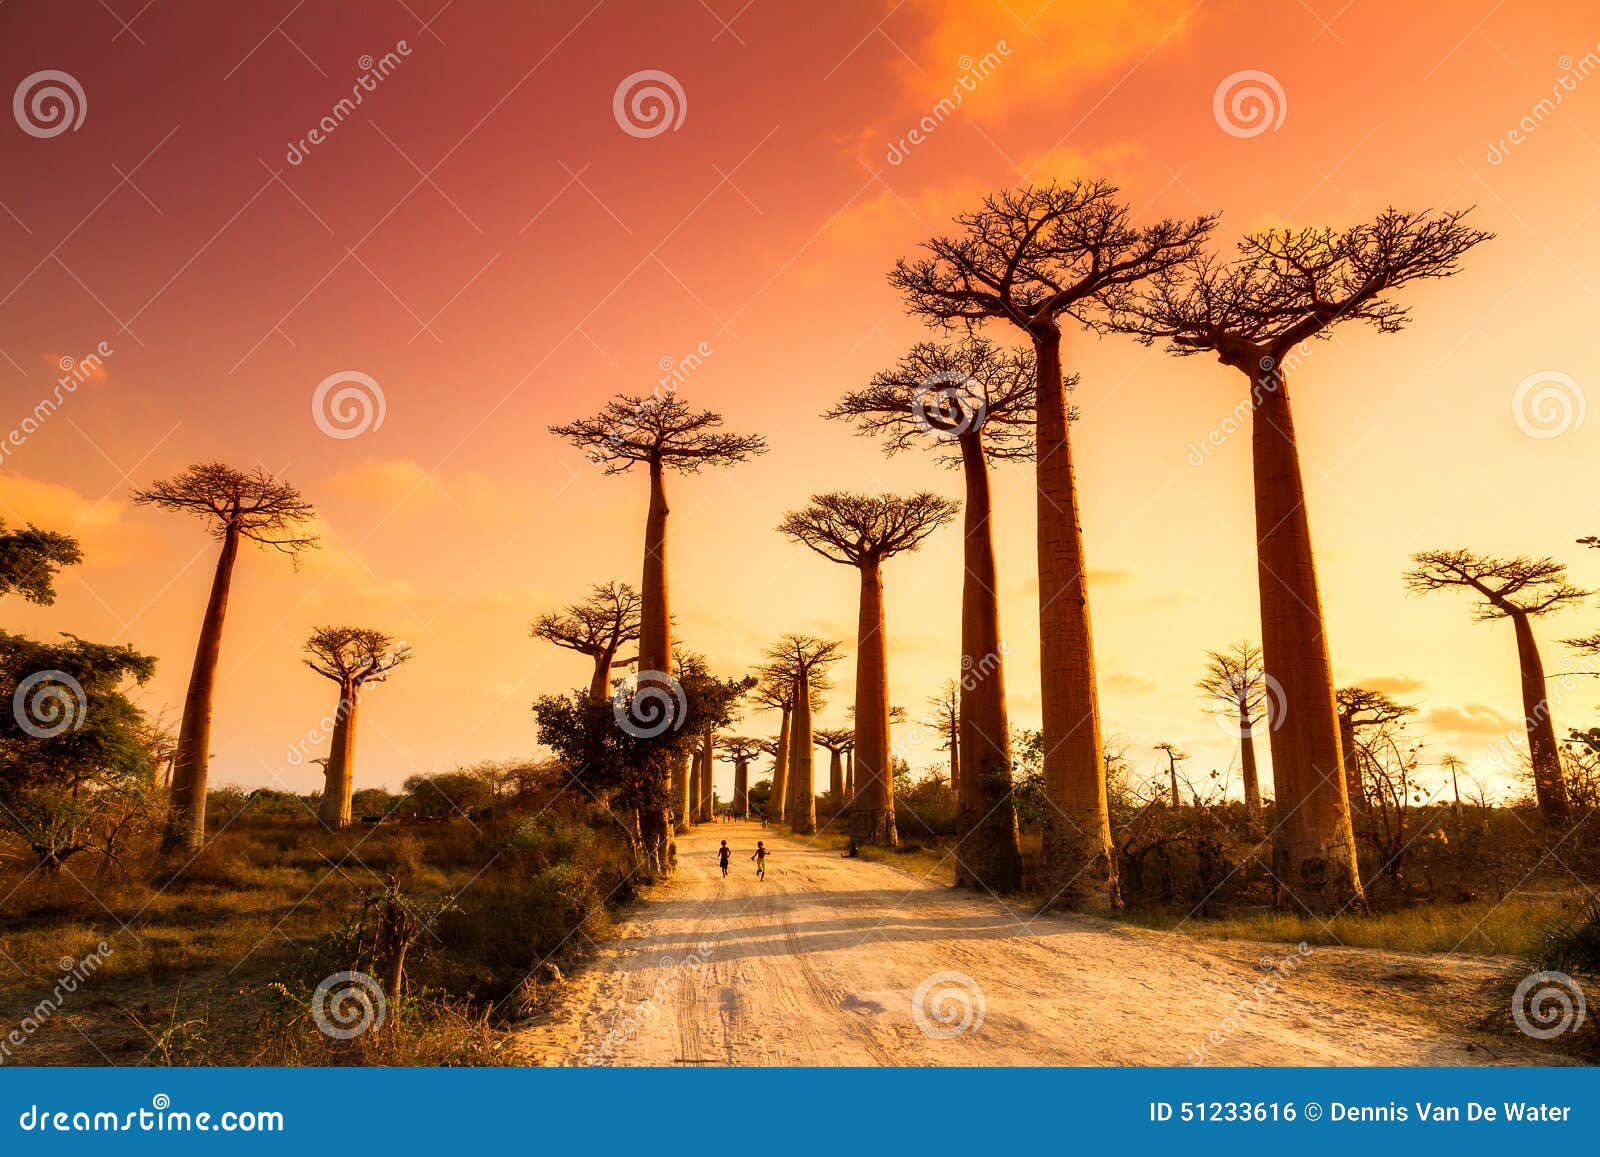 baobab alley sunset